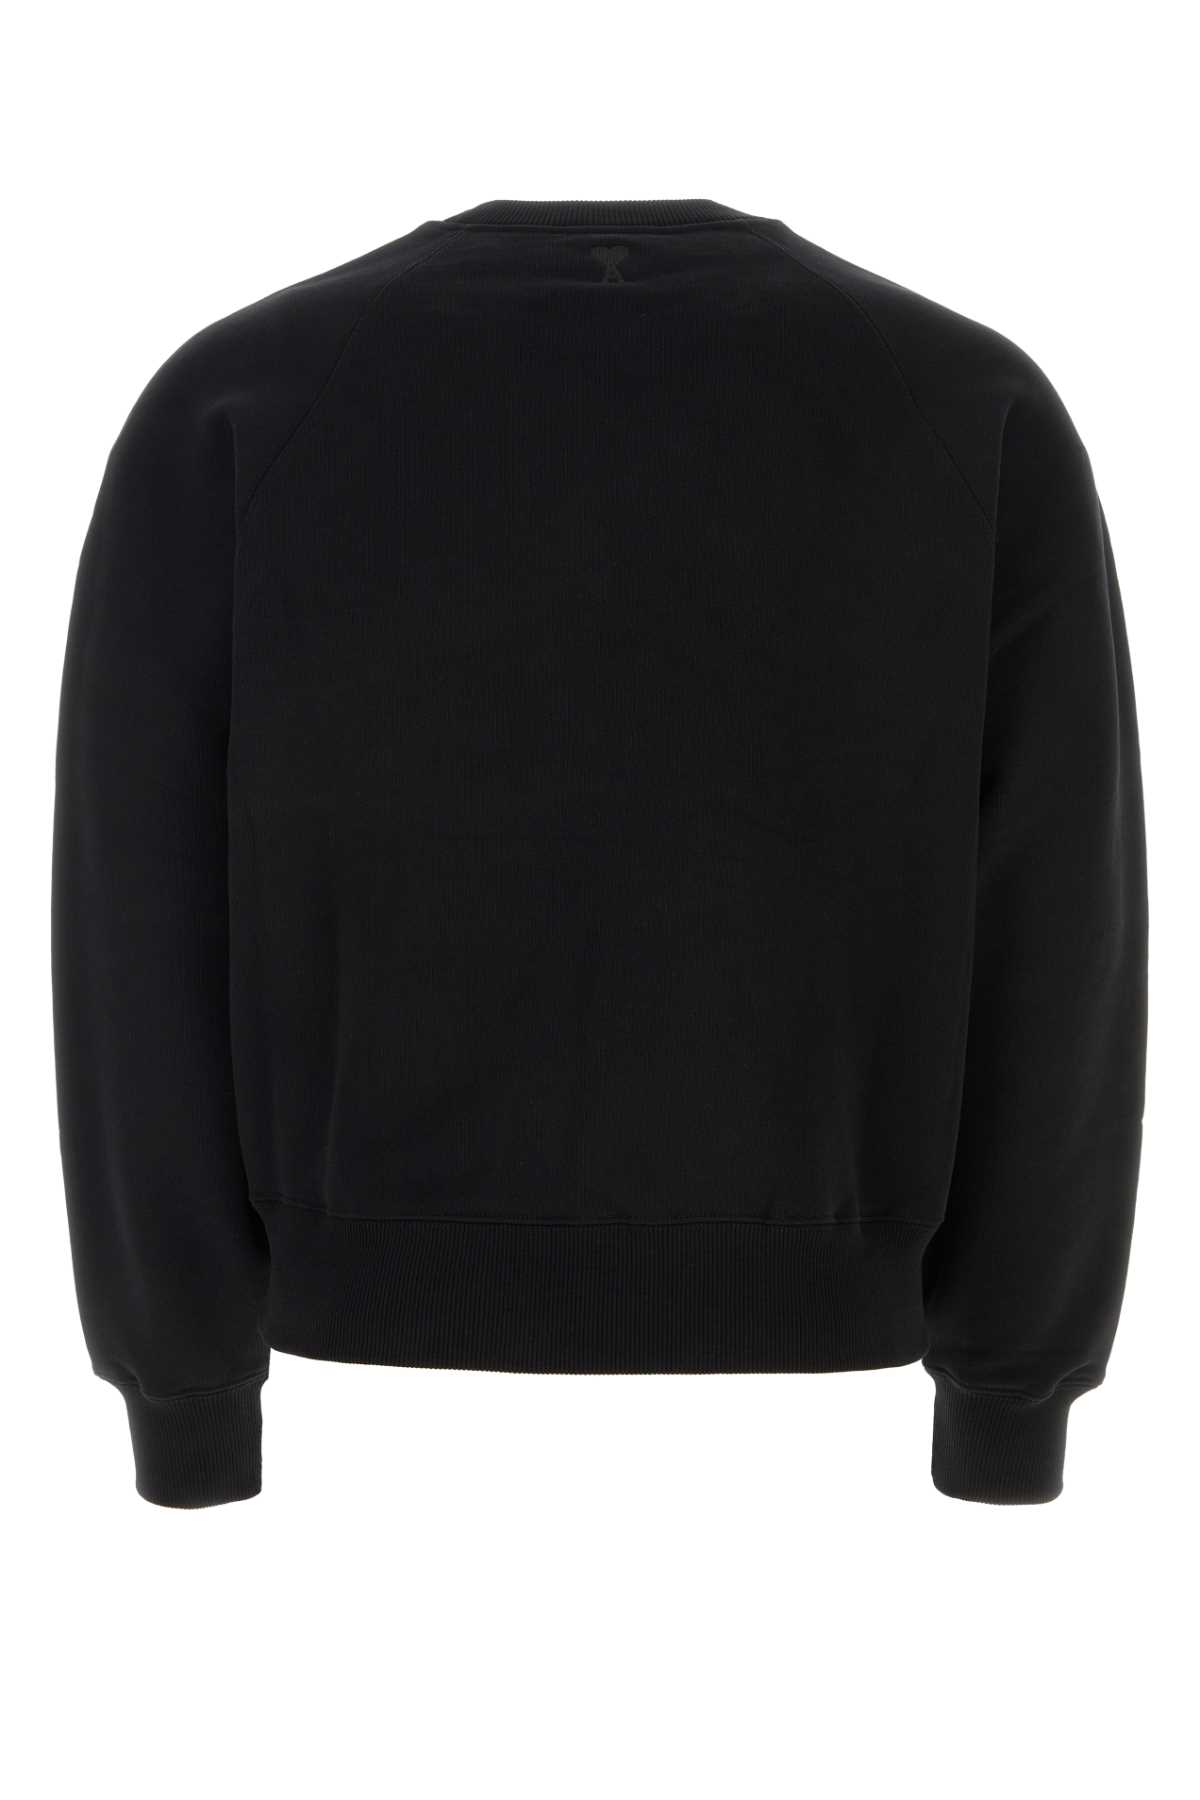 Ami Alexandre Mattiussi Black Stretch Cotton Sweatshirt